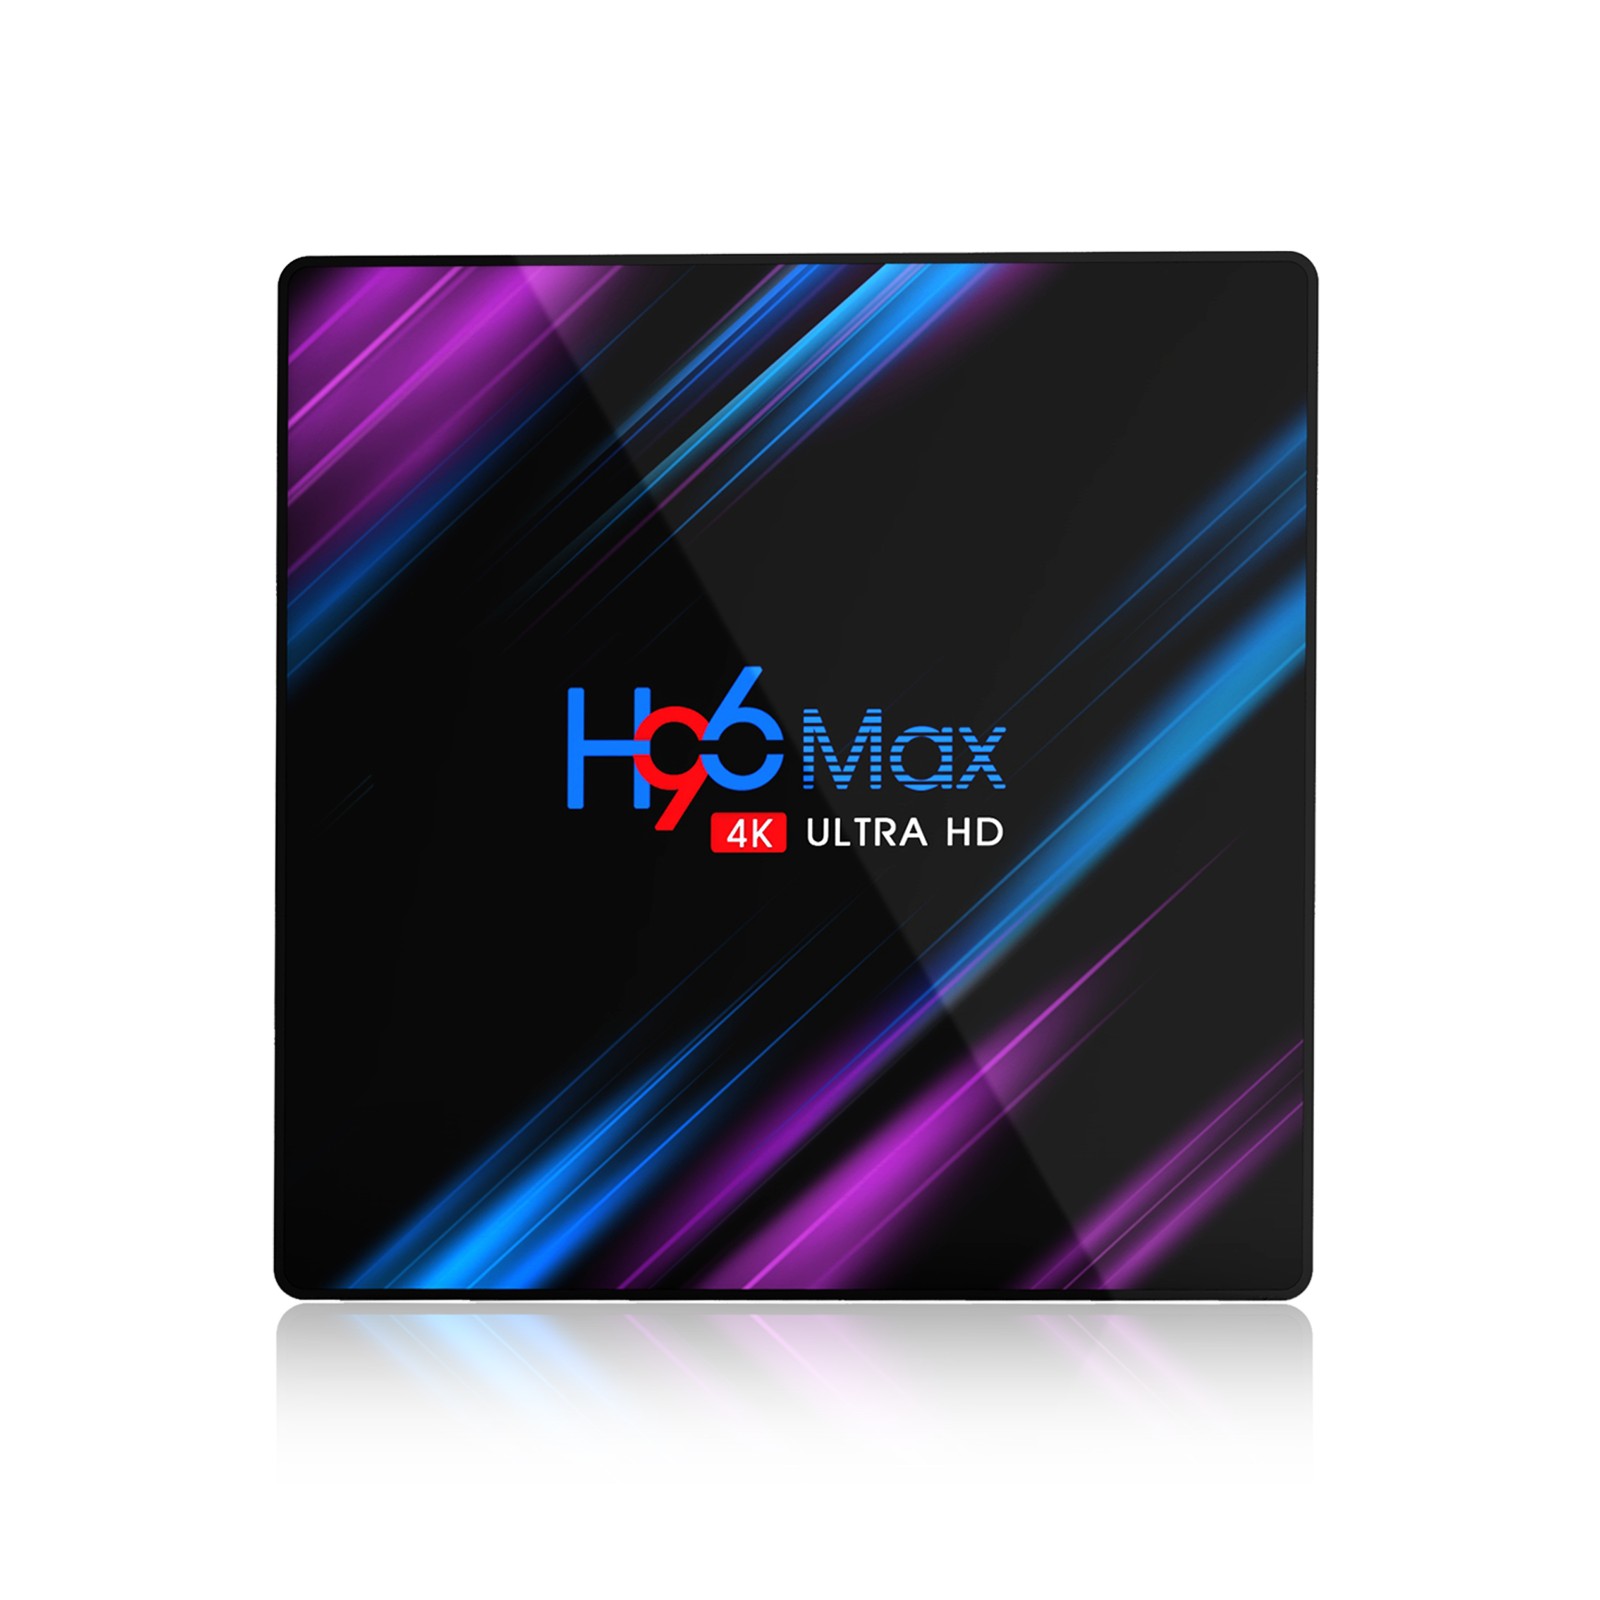 WS-Android TV box H96-MAX RK3318